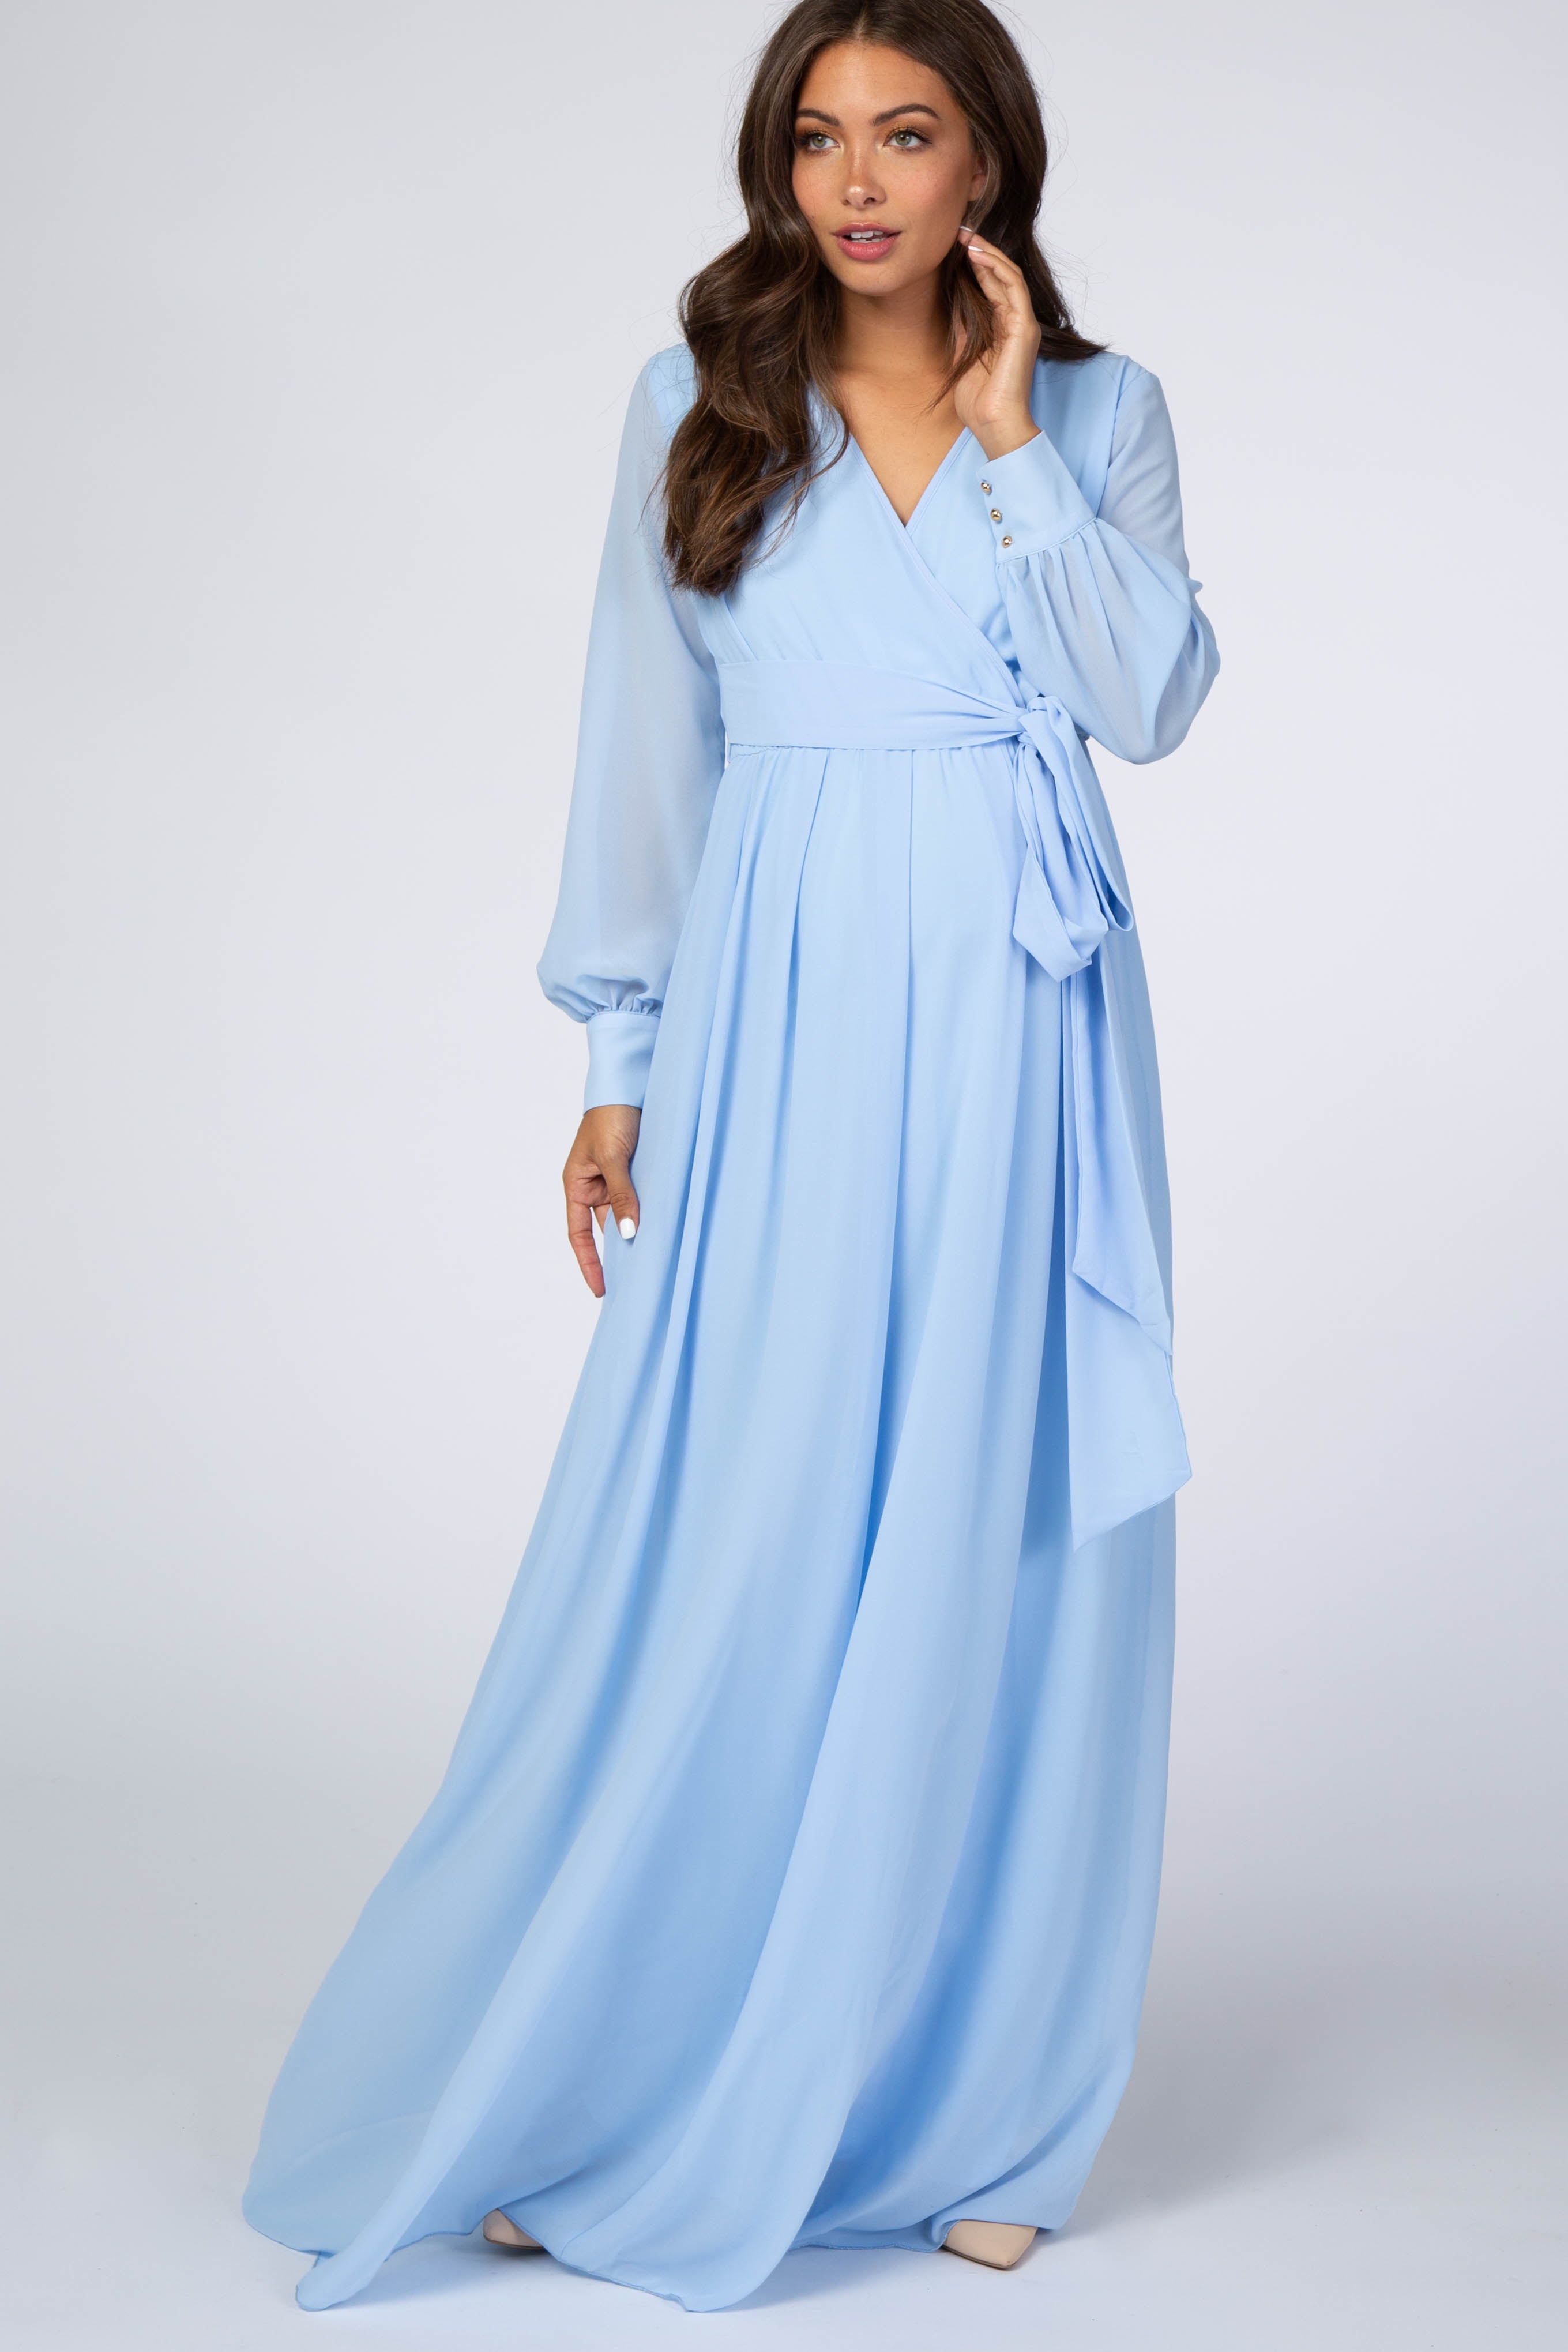 aflange cilia niece Light Blue Chiffon Long Sleeve Maternity Maxi Dress – PinkBlush